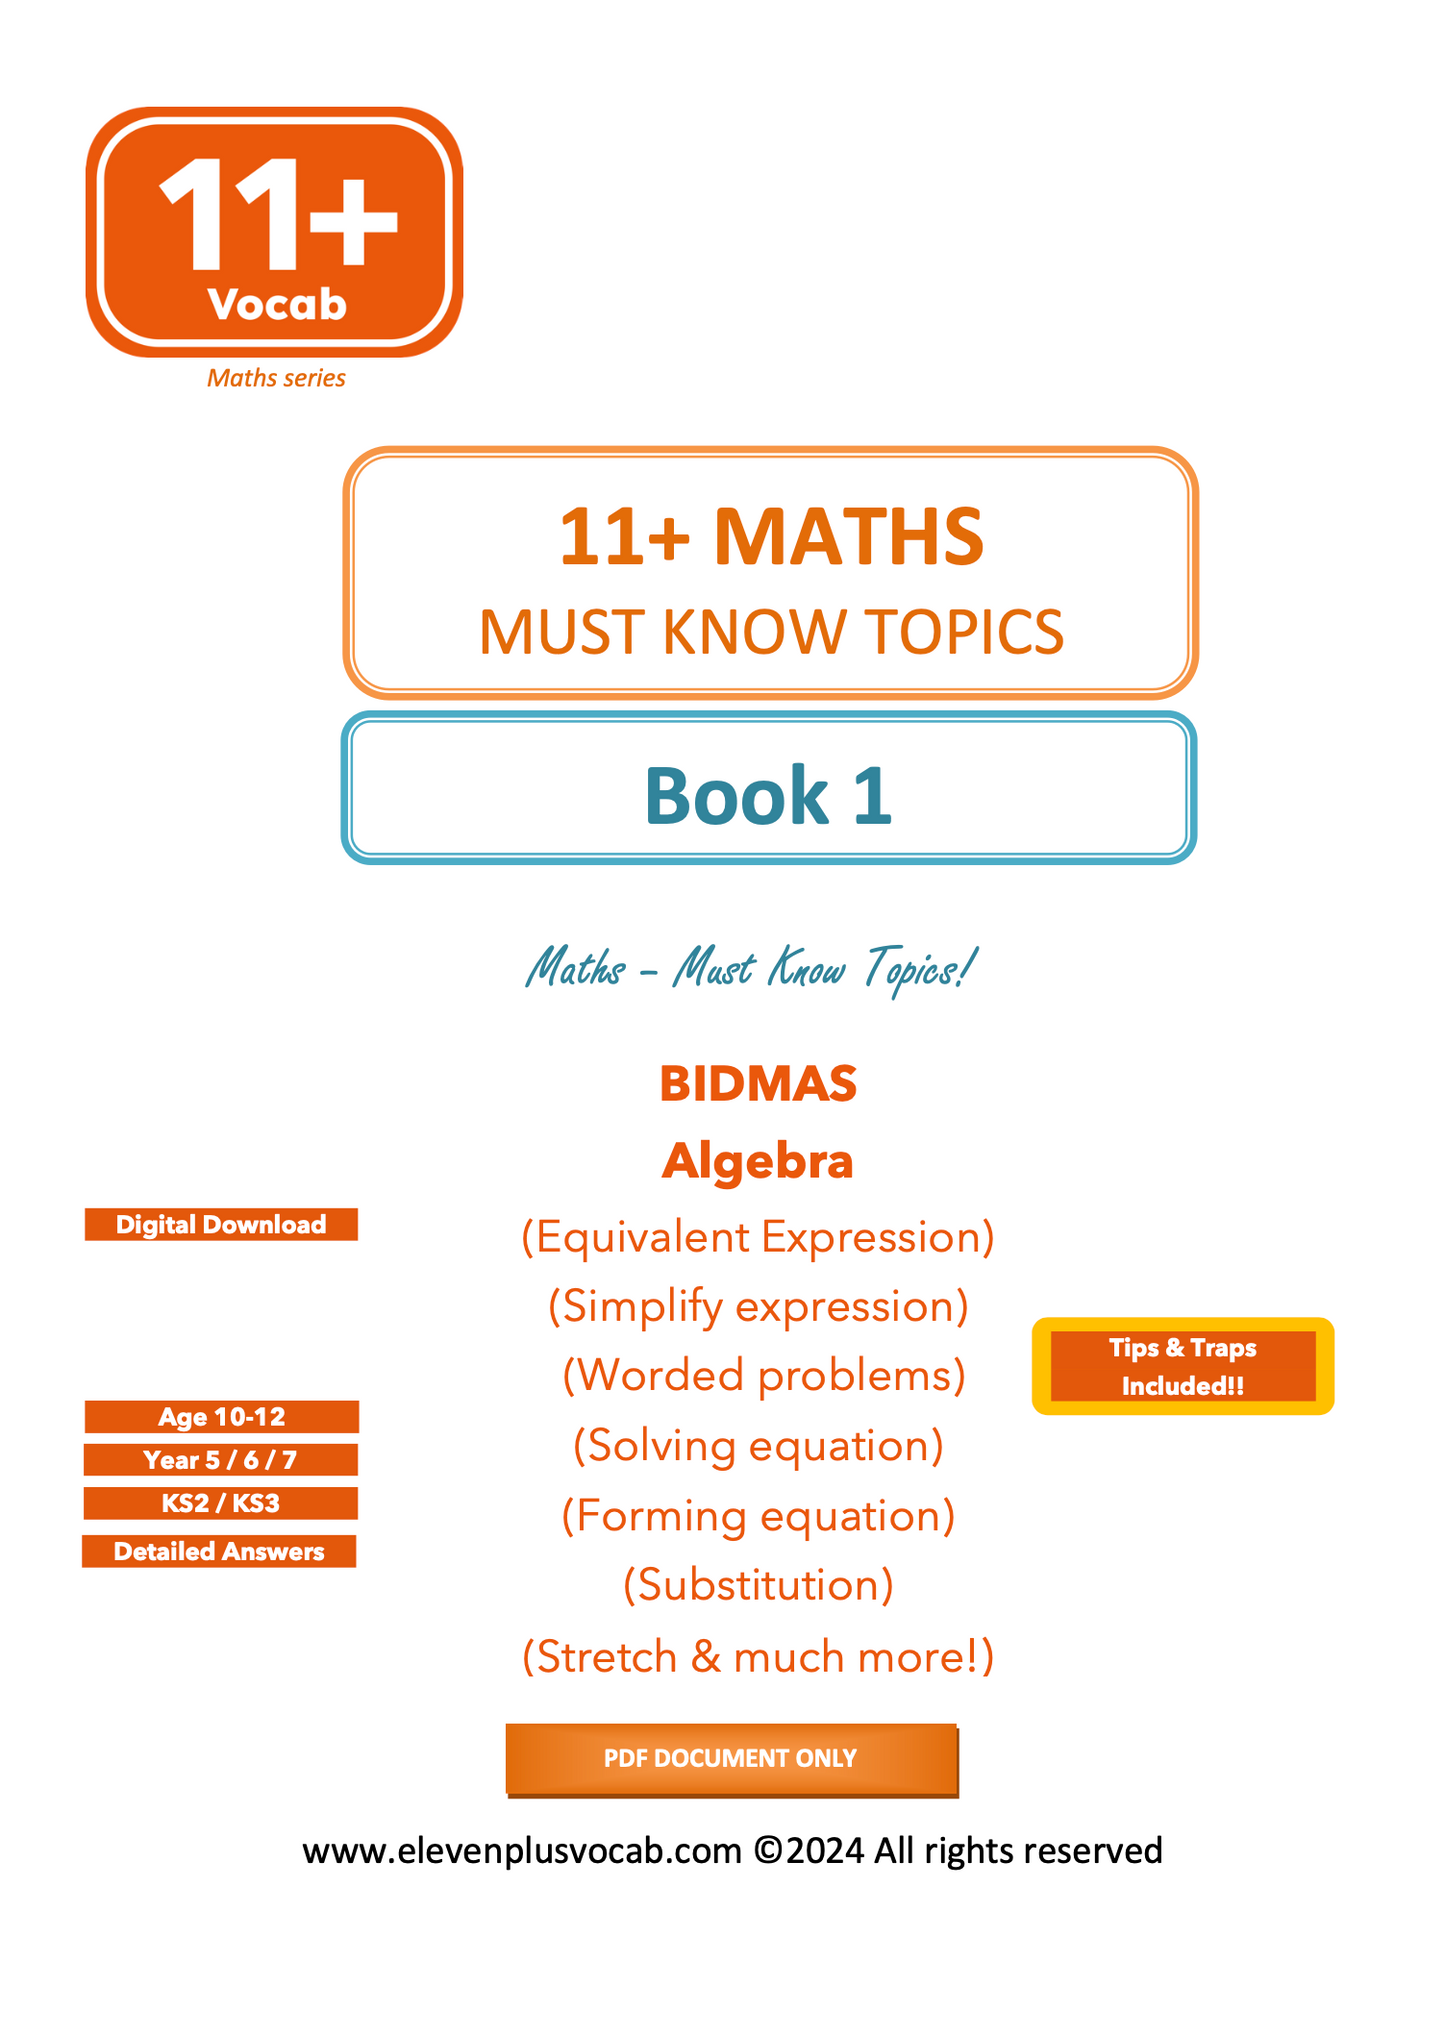 11+ Maths - PDF Book 1